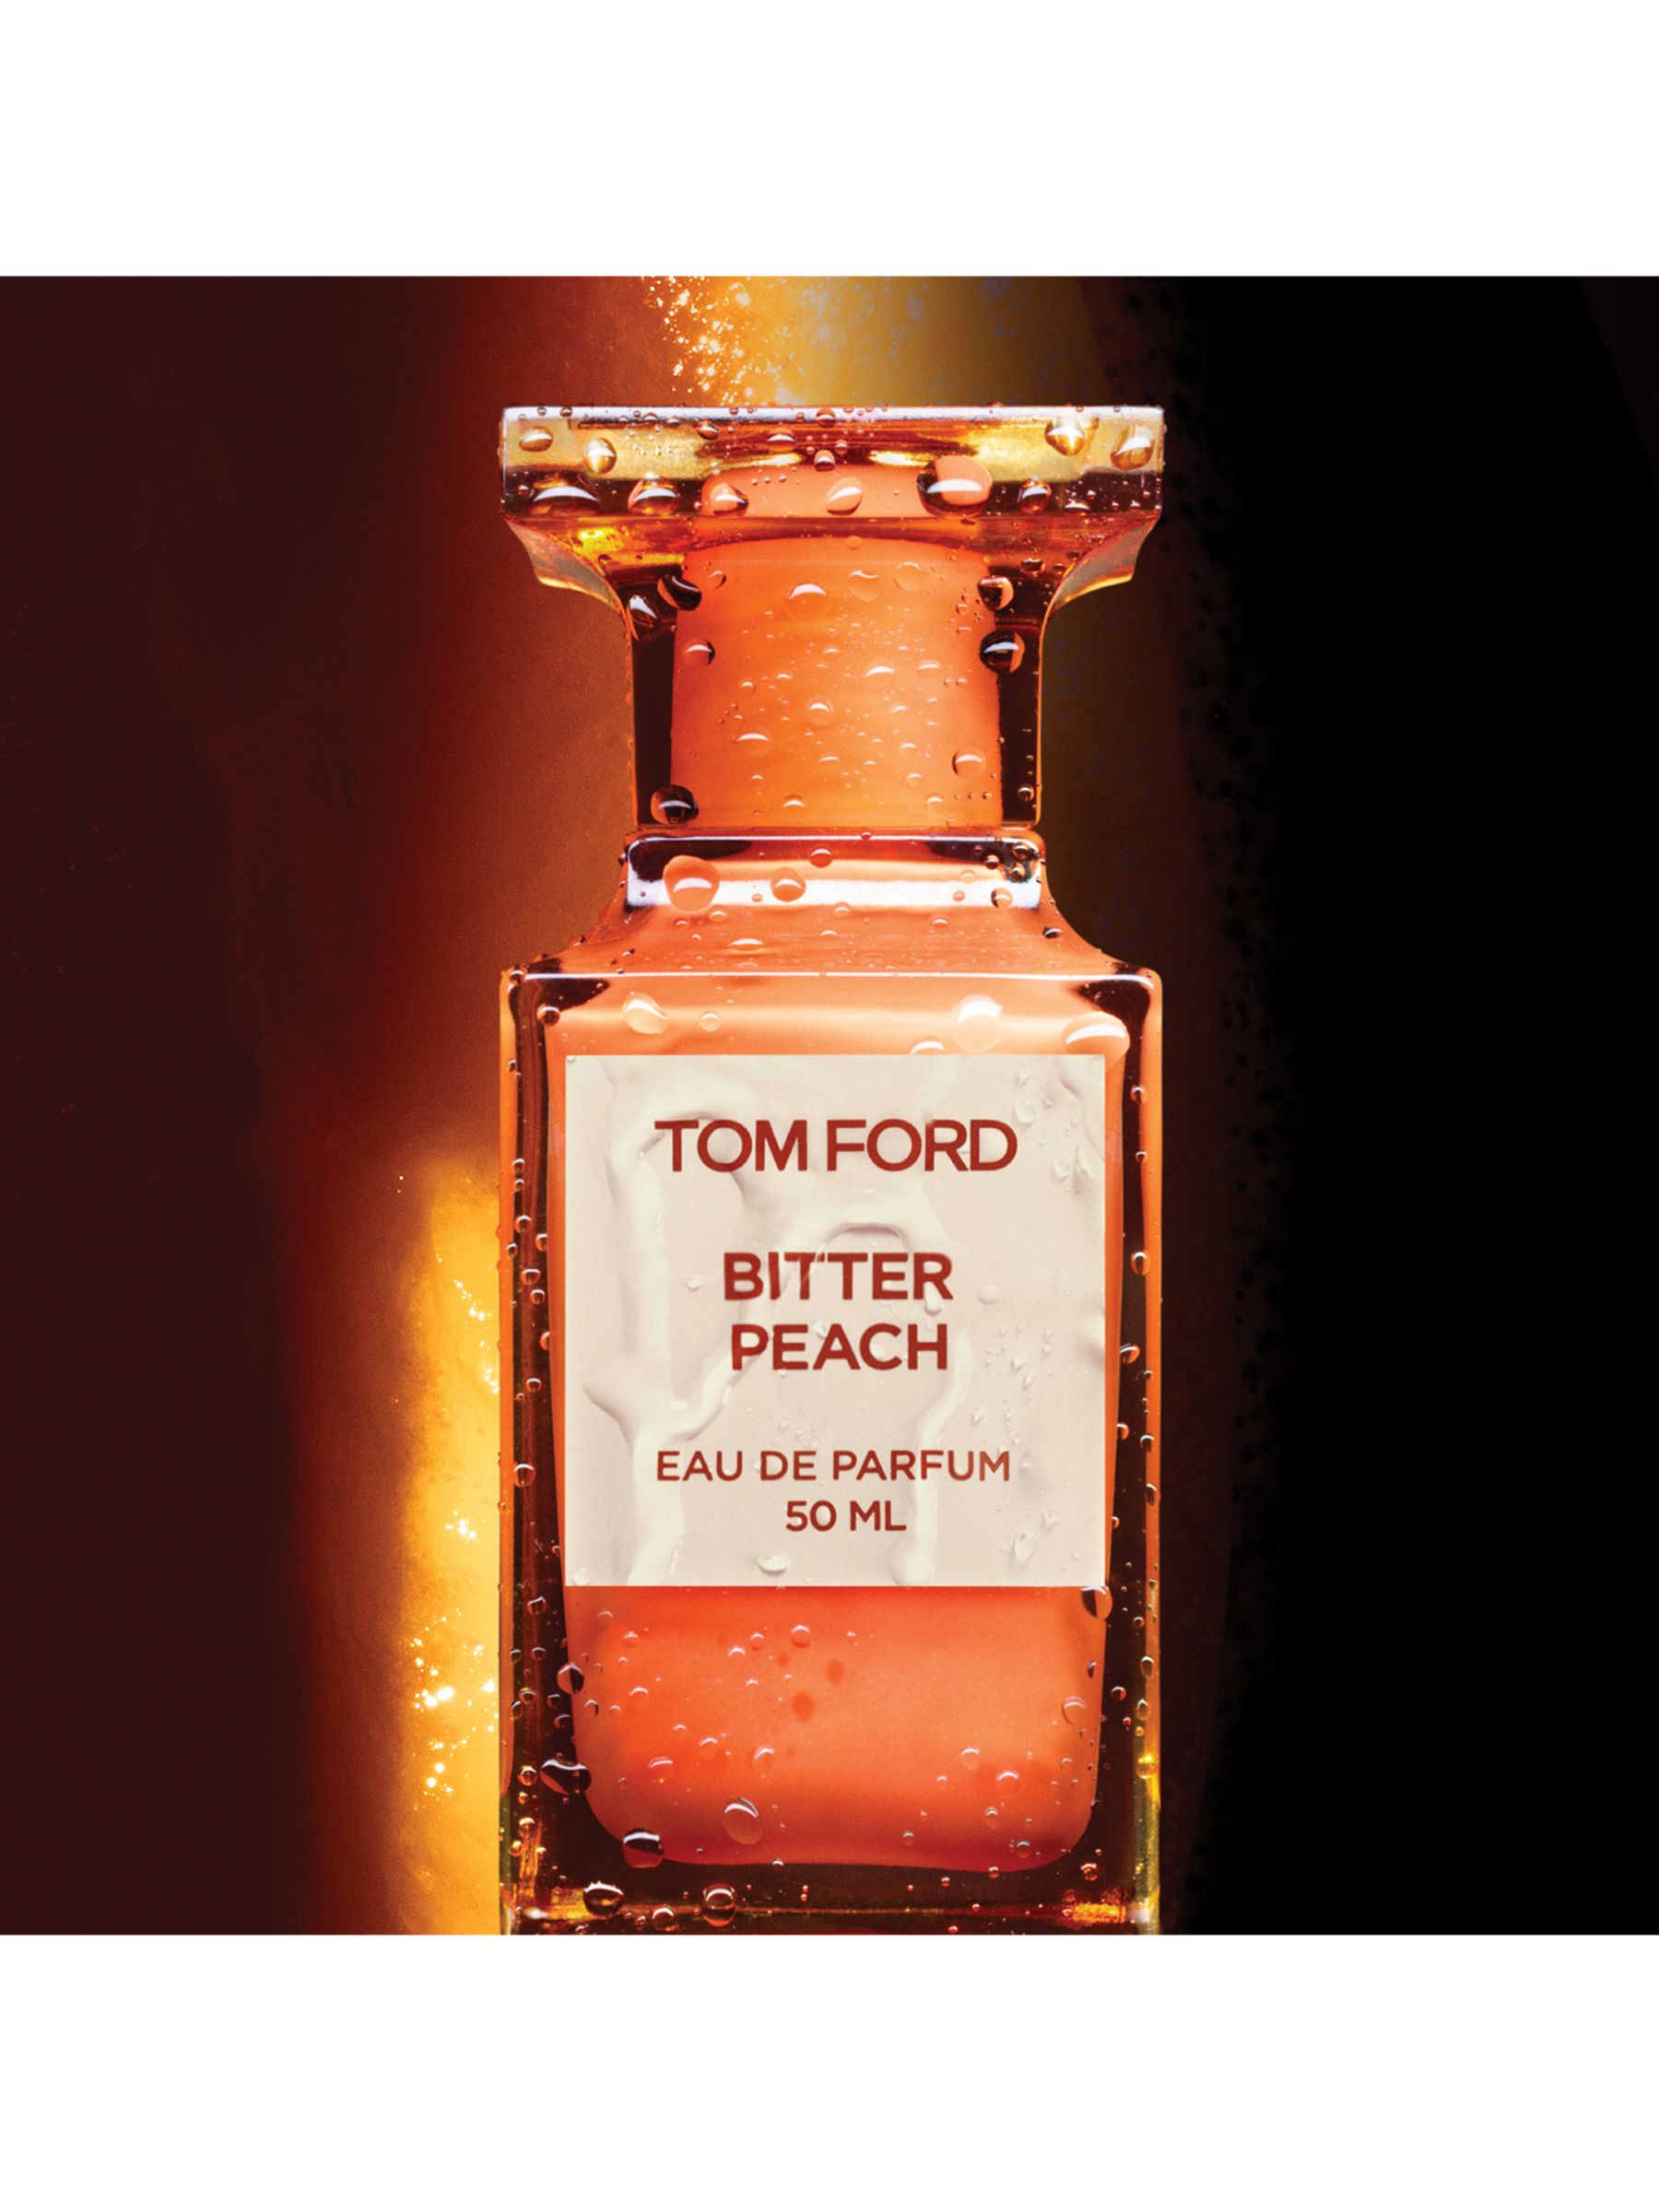 TOM FORD Private Blend Bitter Peach Eau de Parfum Atomiser, 10ml at John  Lewis & Partners